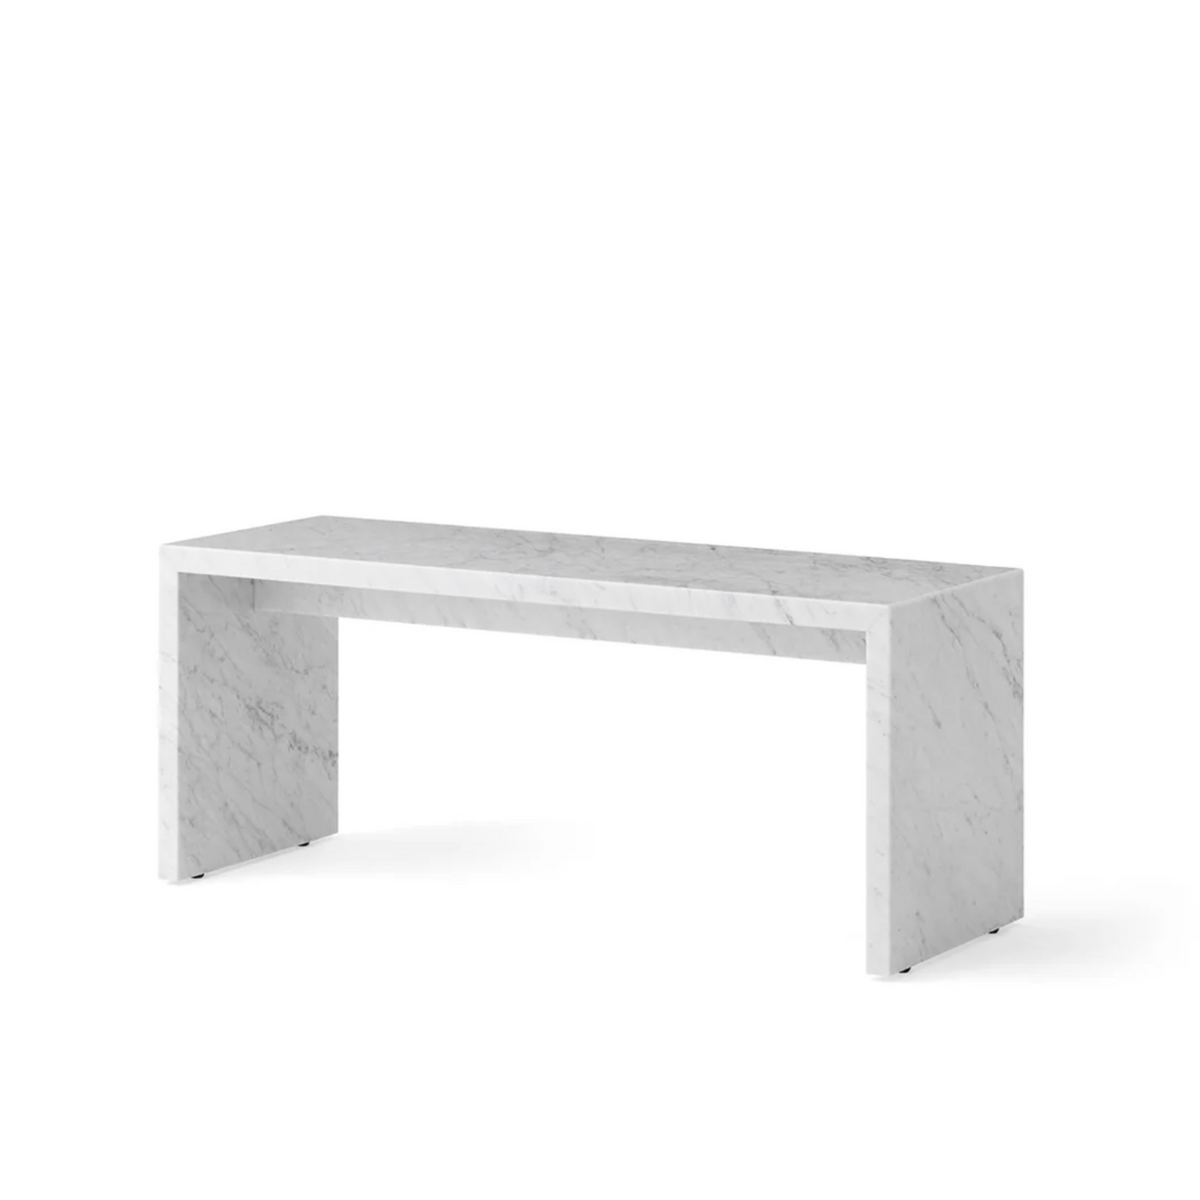 Plinth Bridge Table - White Marble Carrara